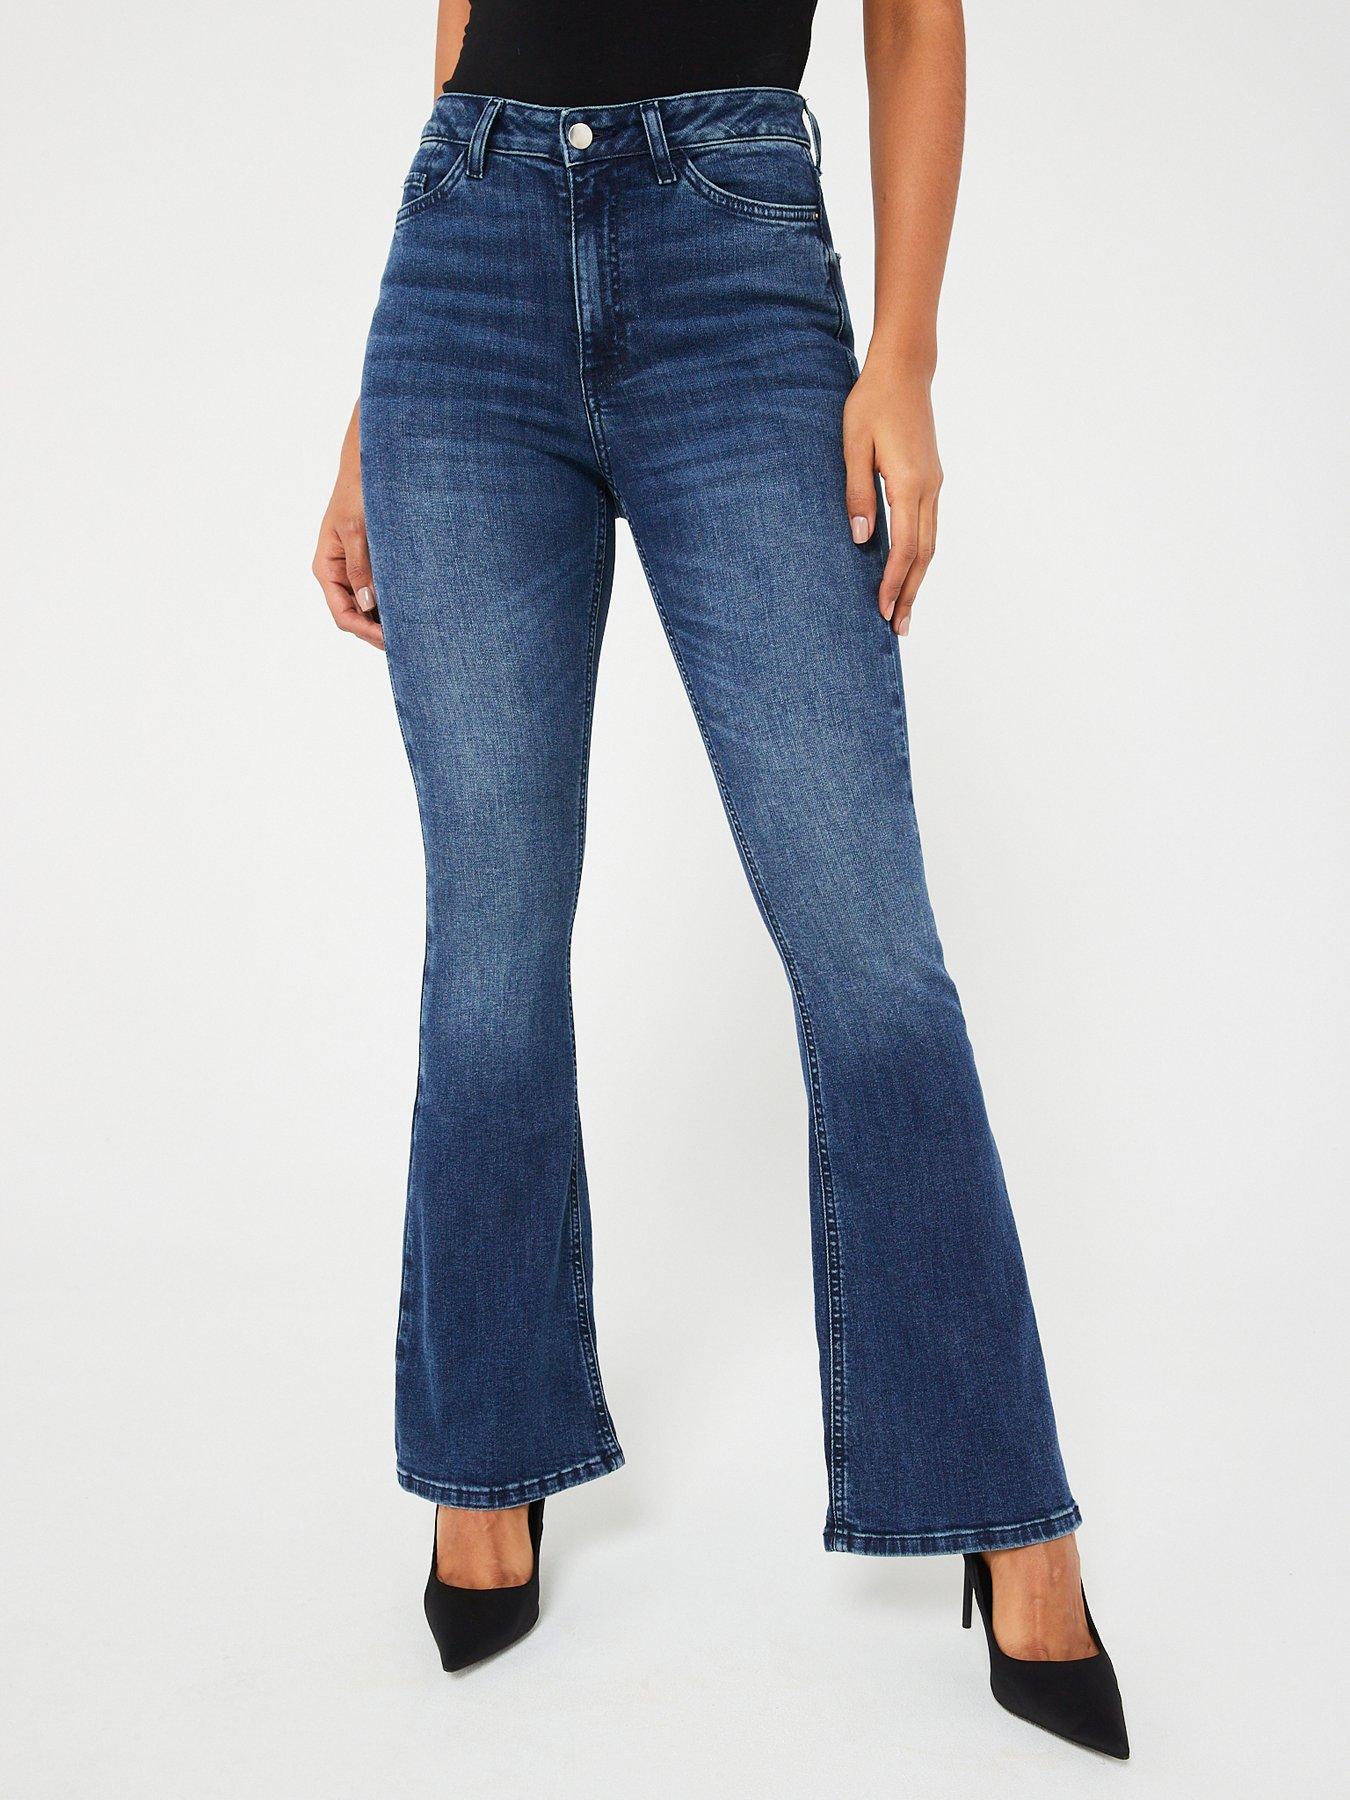 Women's Ultra High Rise Stretch Flare Jean | Women's Bottoms |  Abercrombie.com